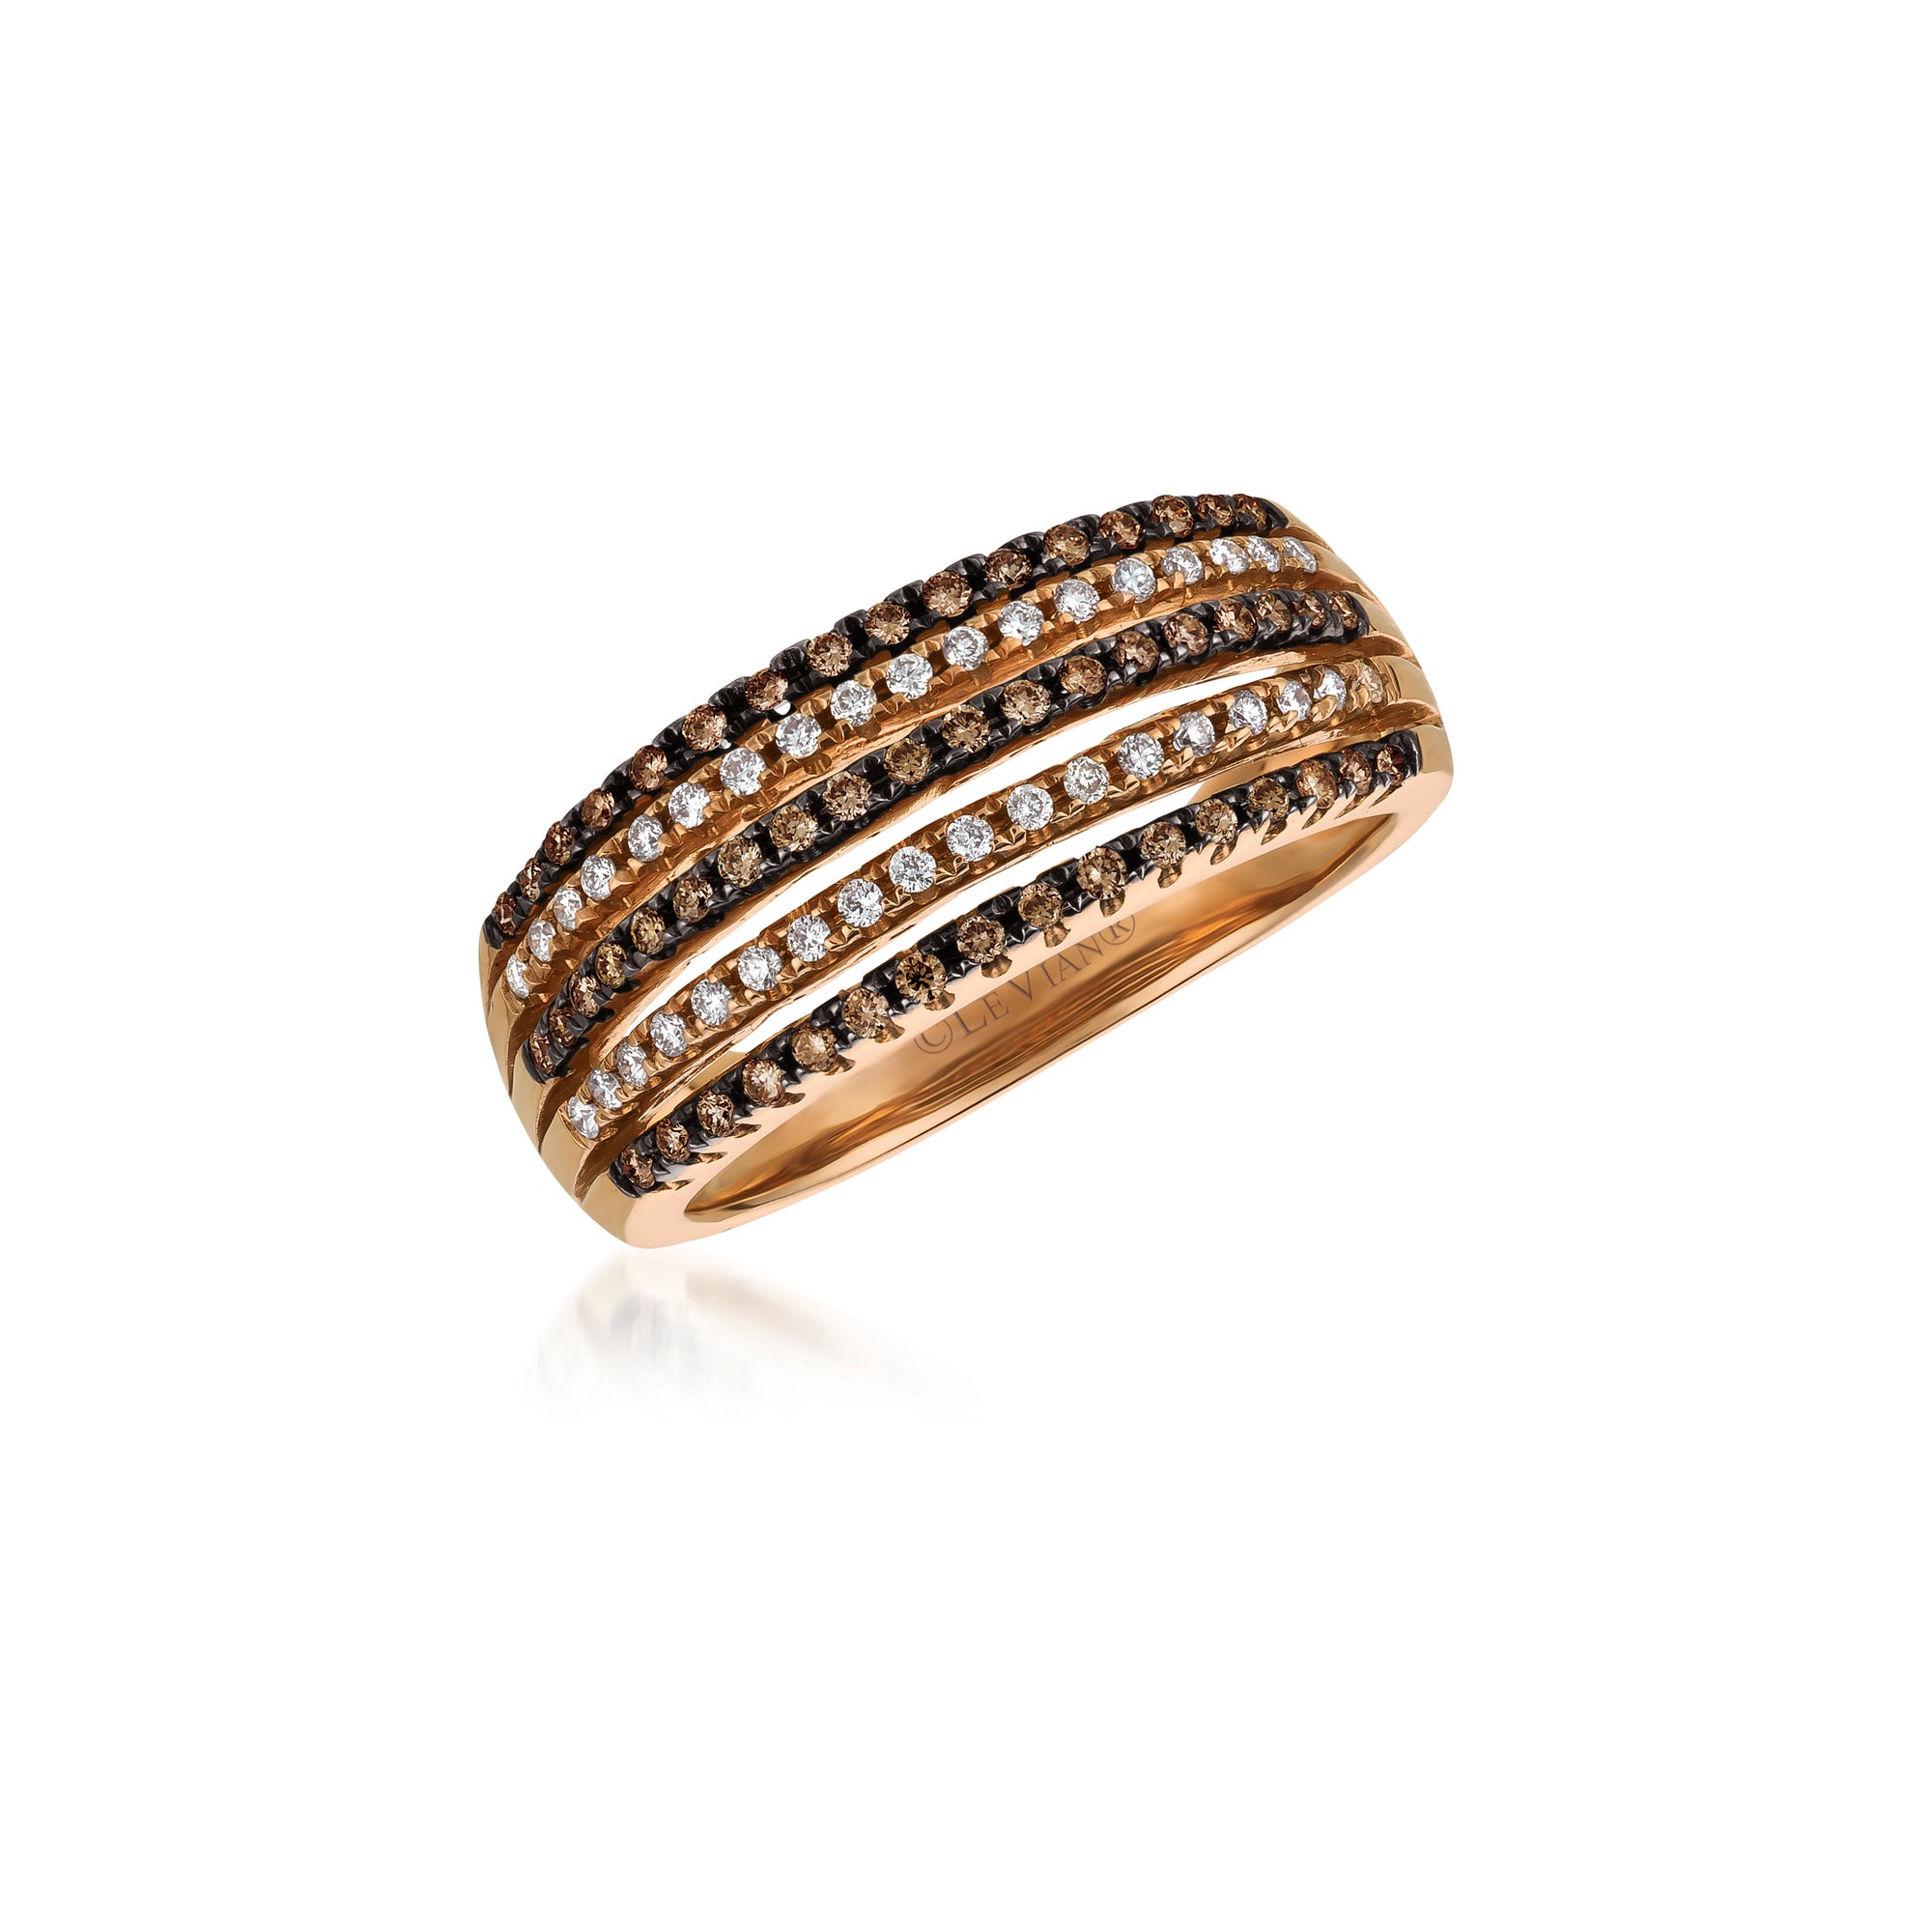 14K Strawberry Gold Ring With Chocolate And Vanilla Diamonds